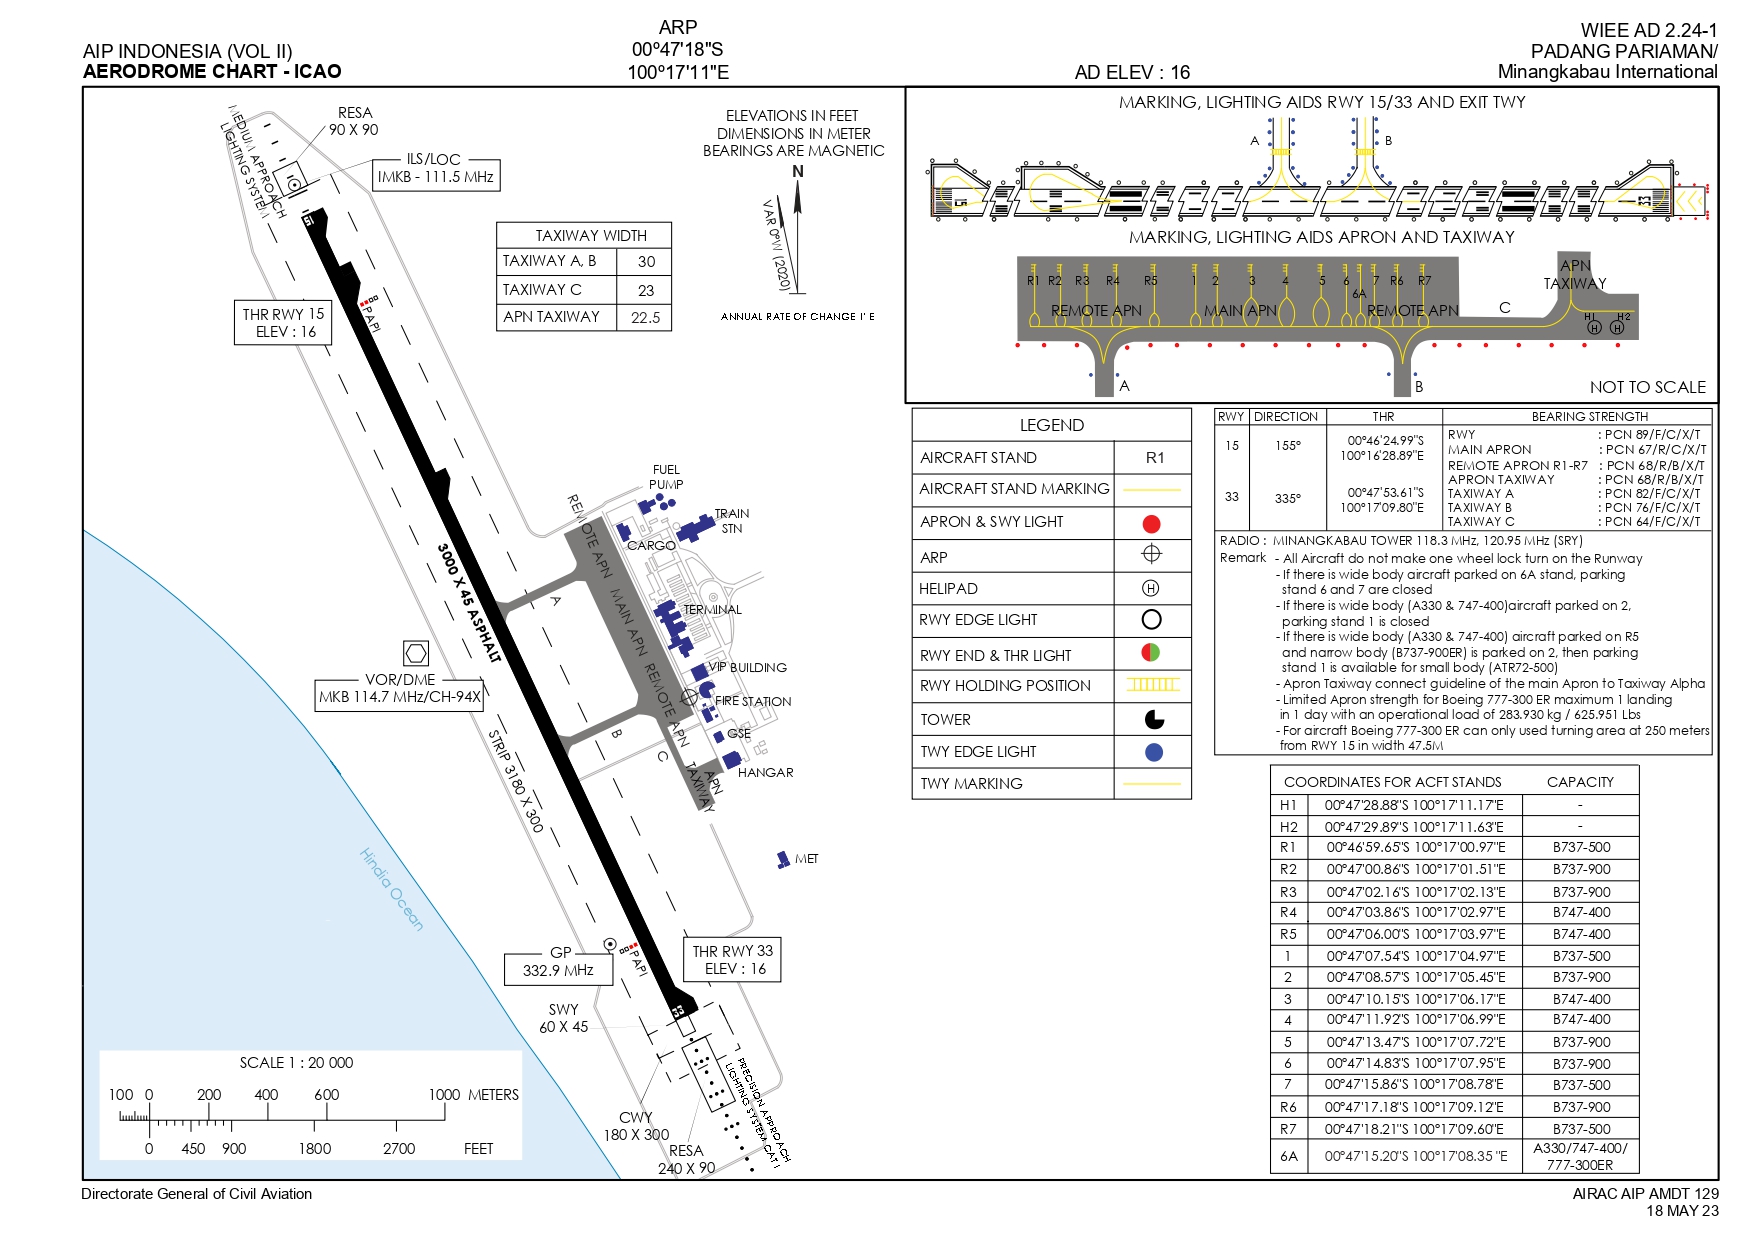 Gambar Peta Bandara AERODROME CHART BANDAR UDARA INTERNASIONAL MINANGKABAU